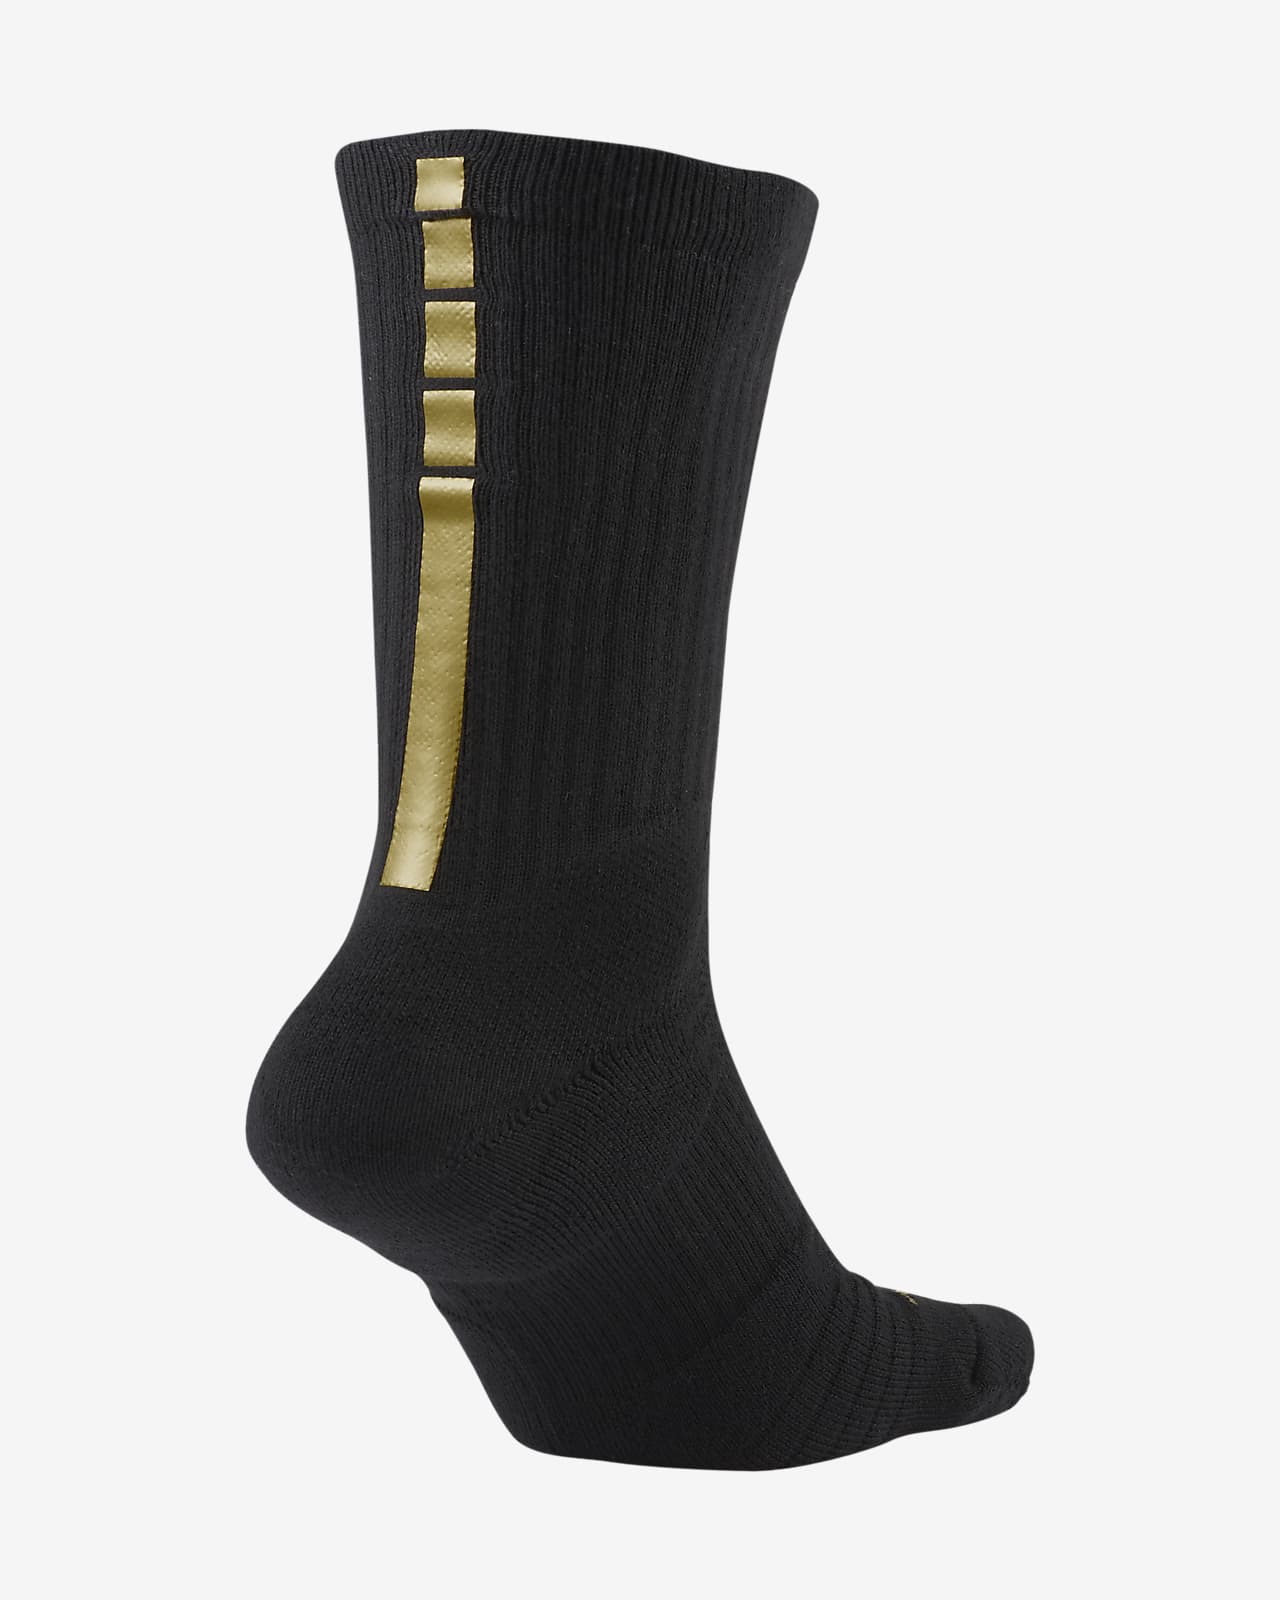 nike elite socks black and gold